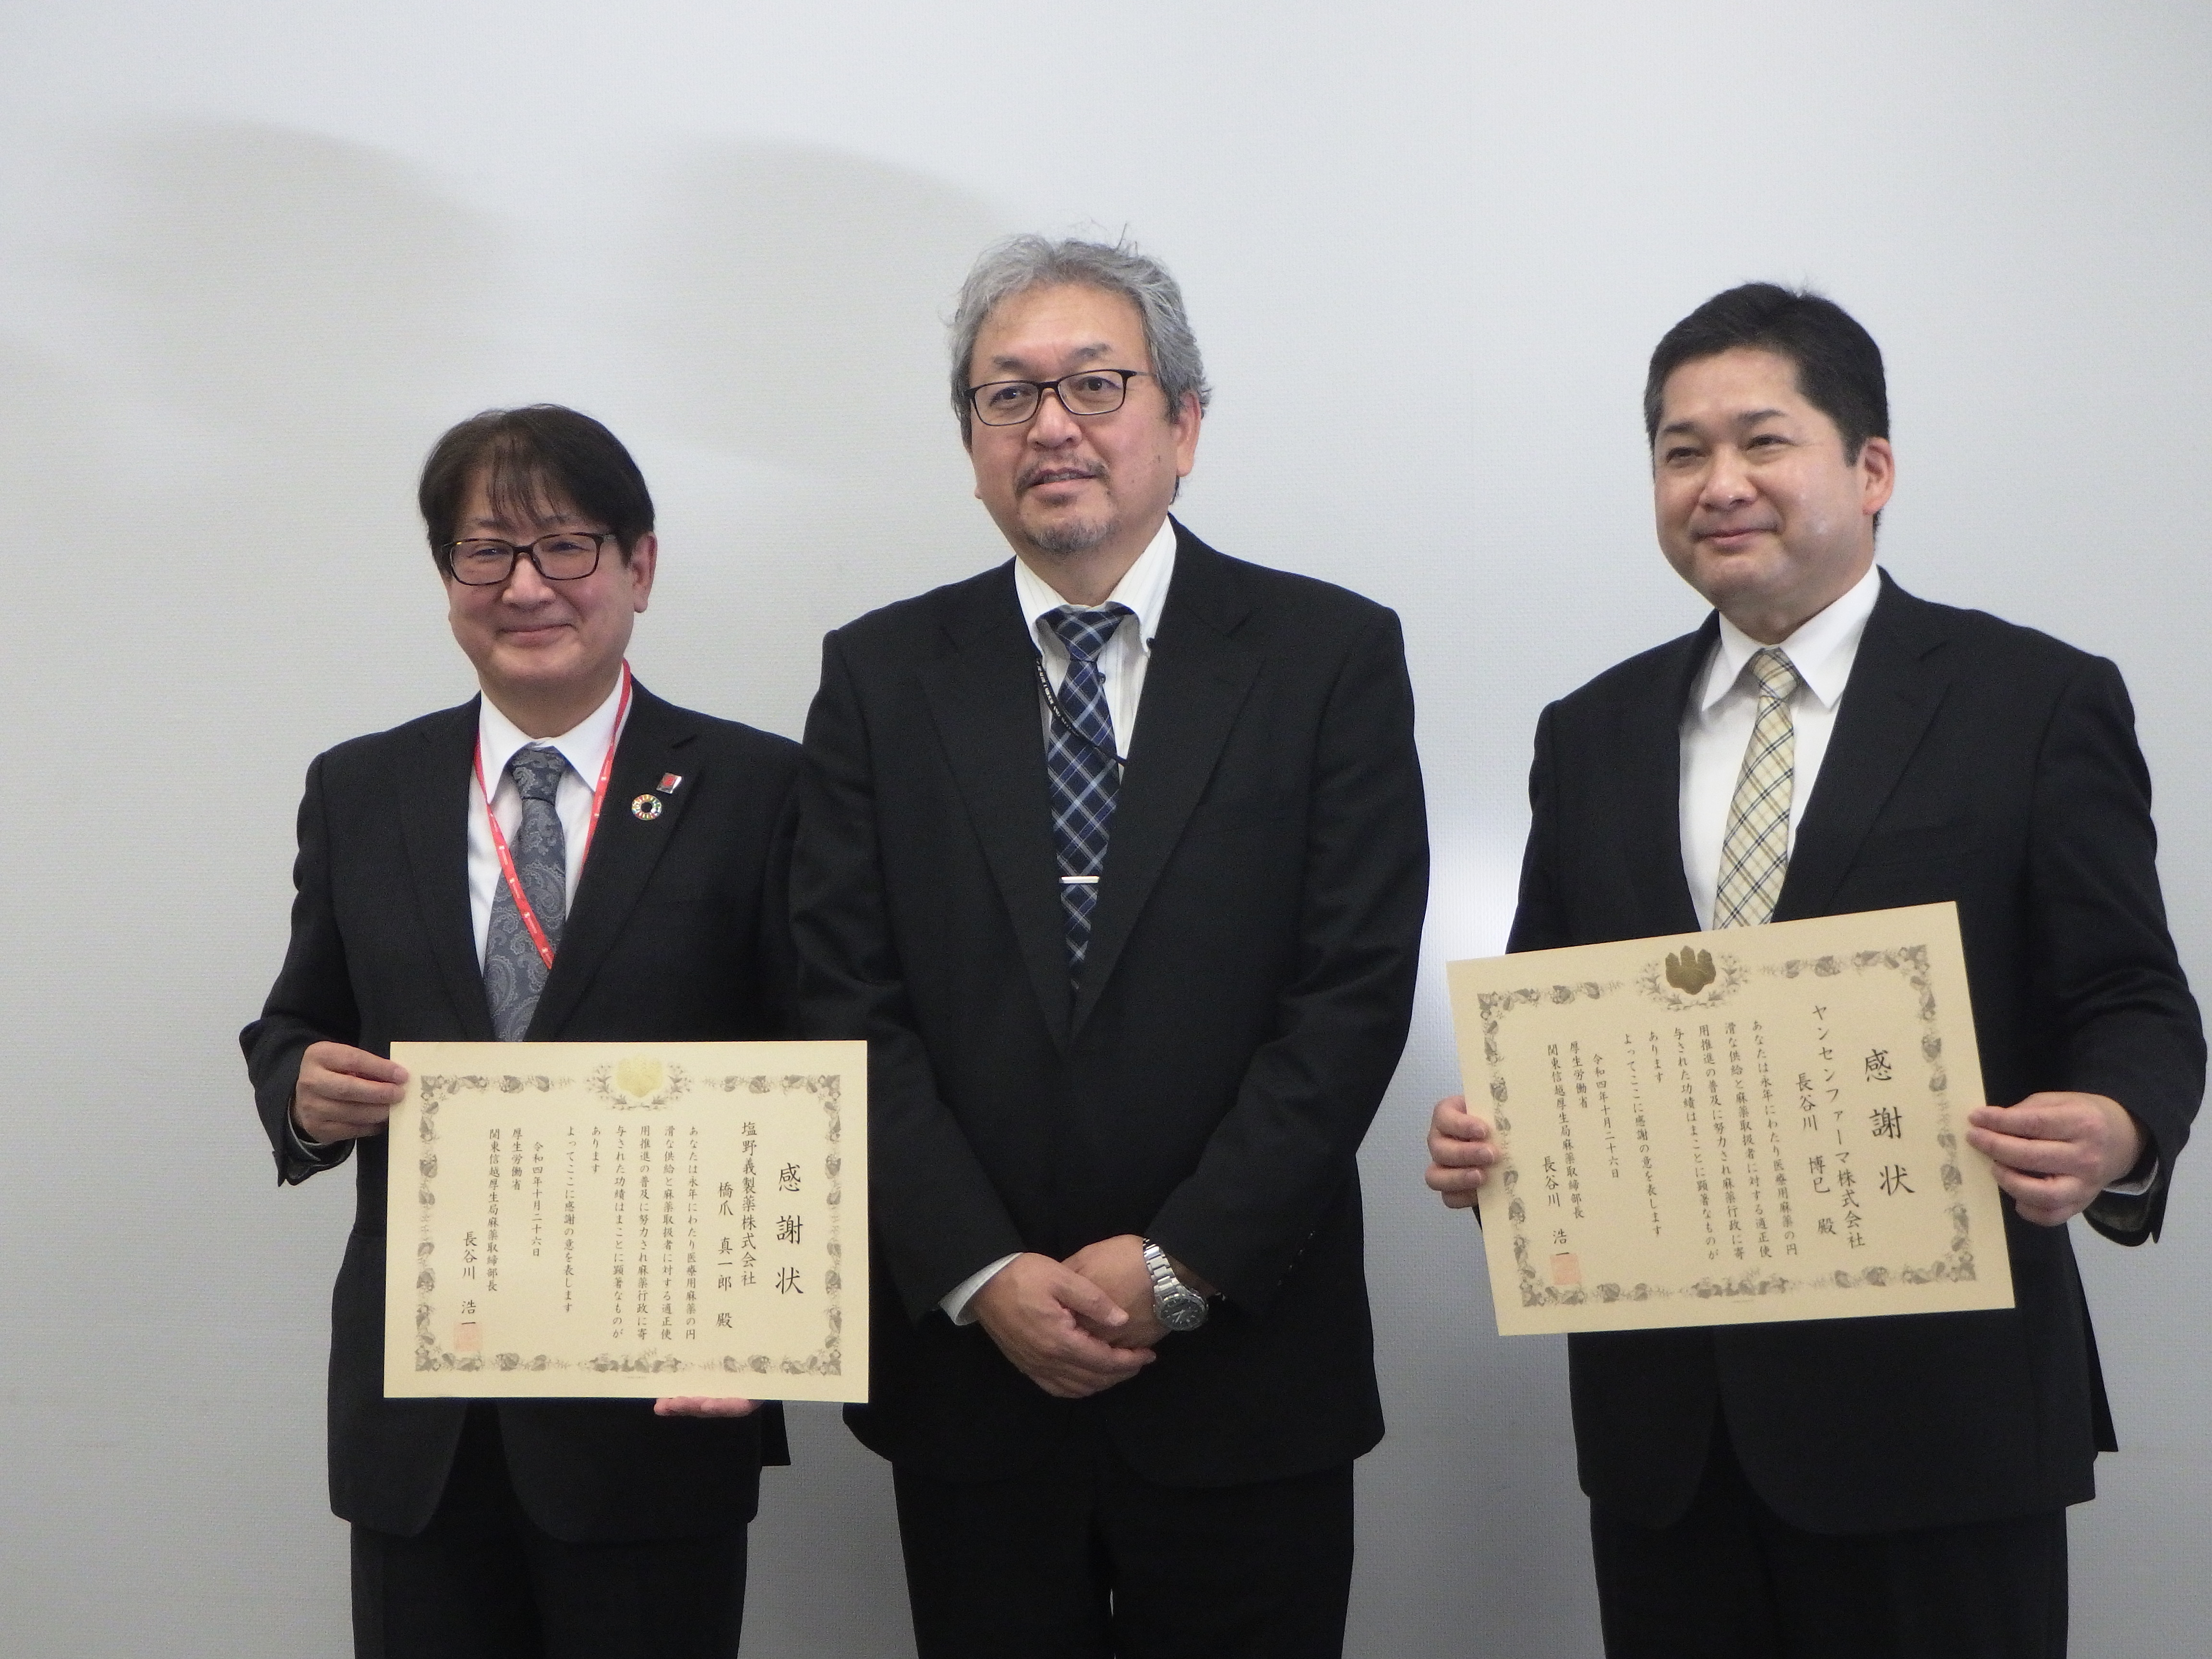 写真中央が長谷川部長、左右は受賞者